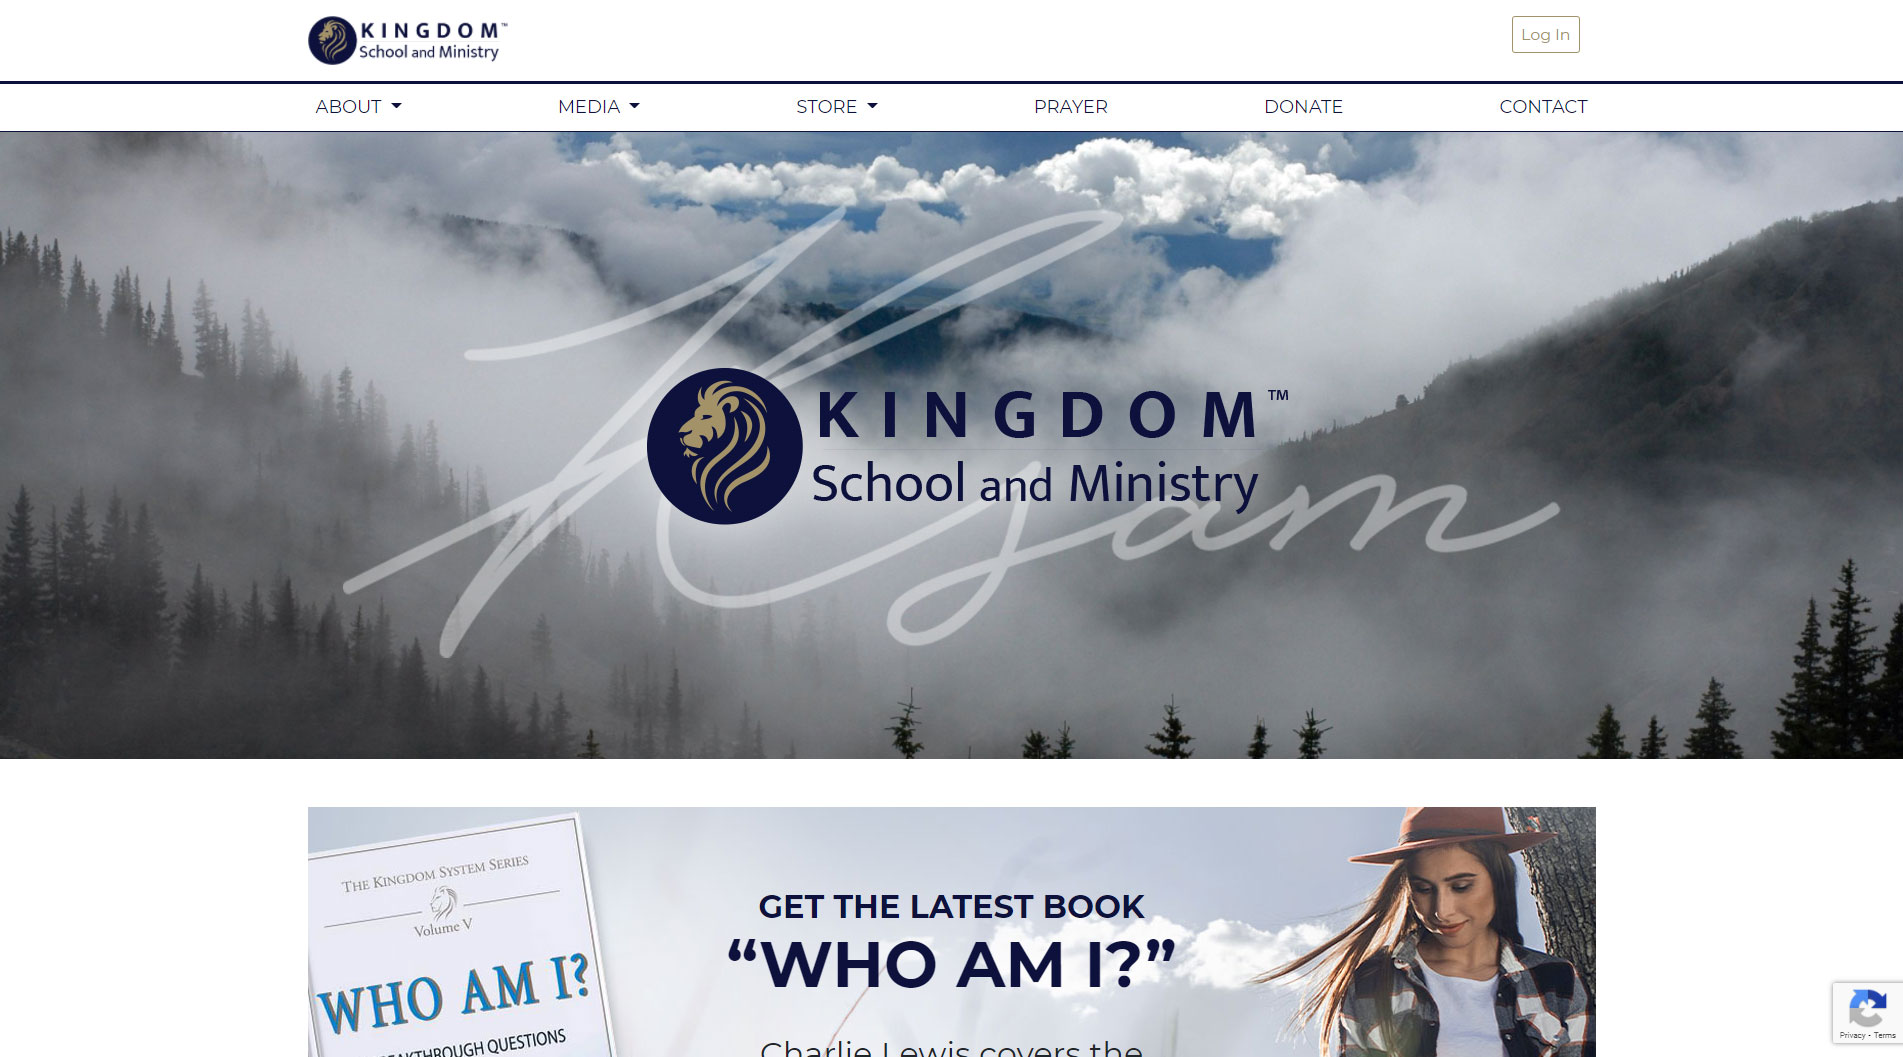 Kingdom School and Ministry